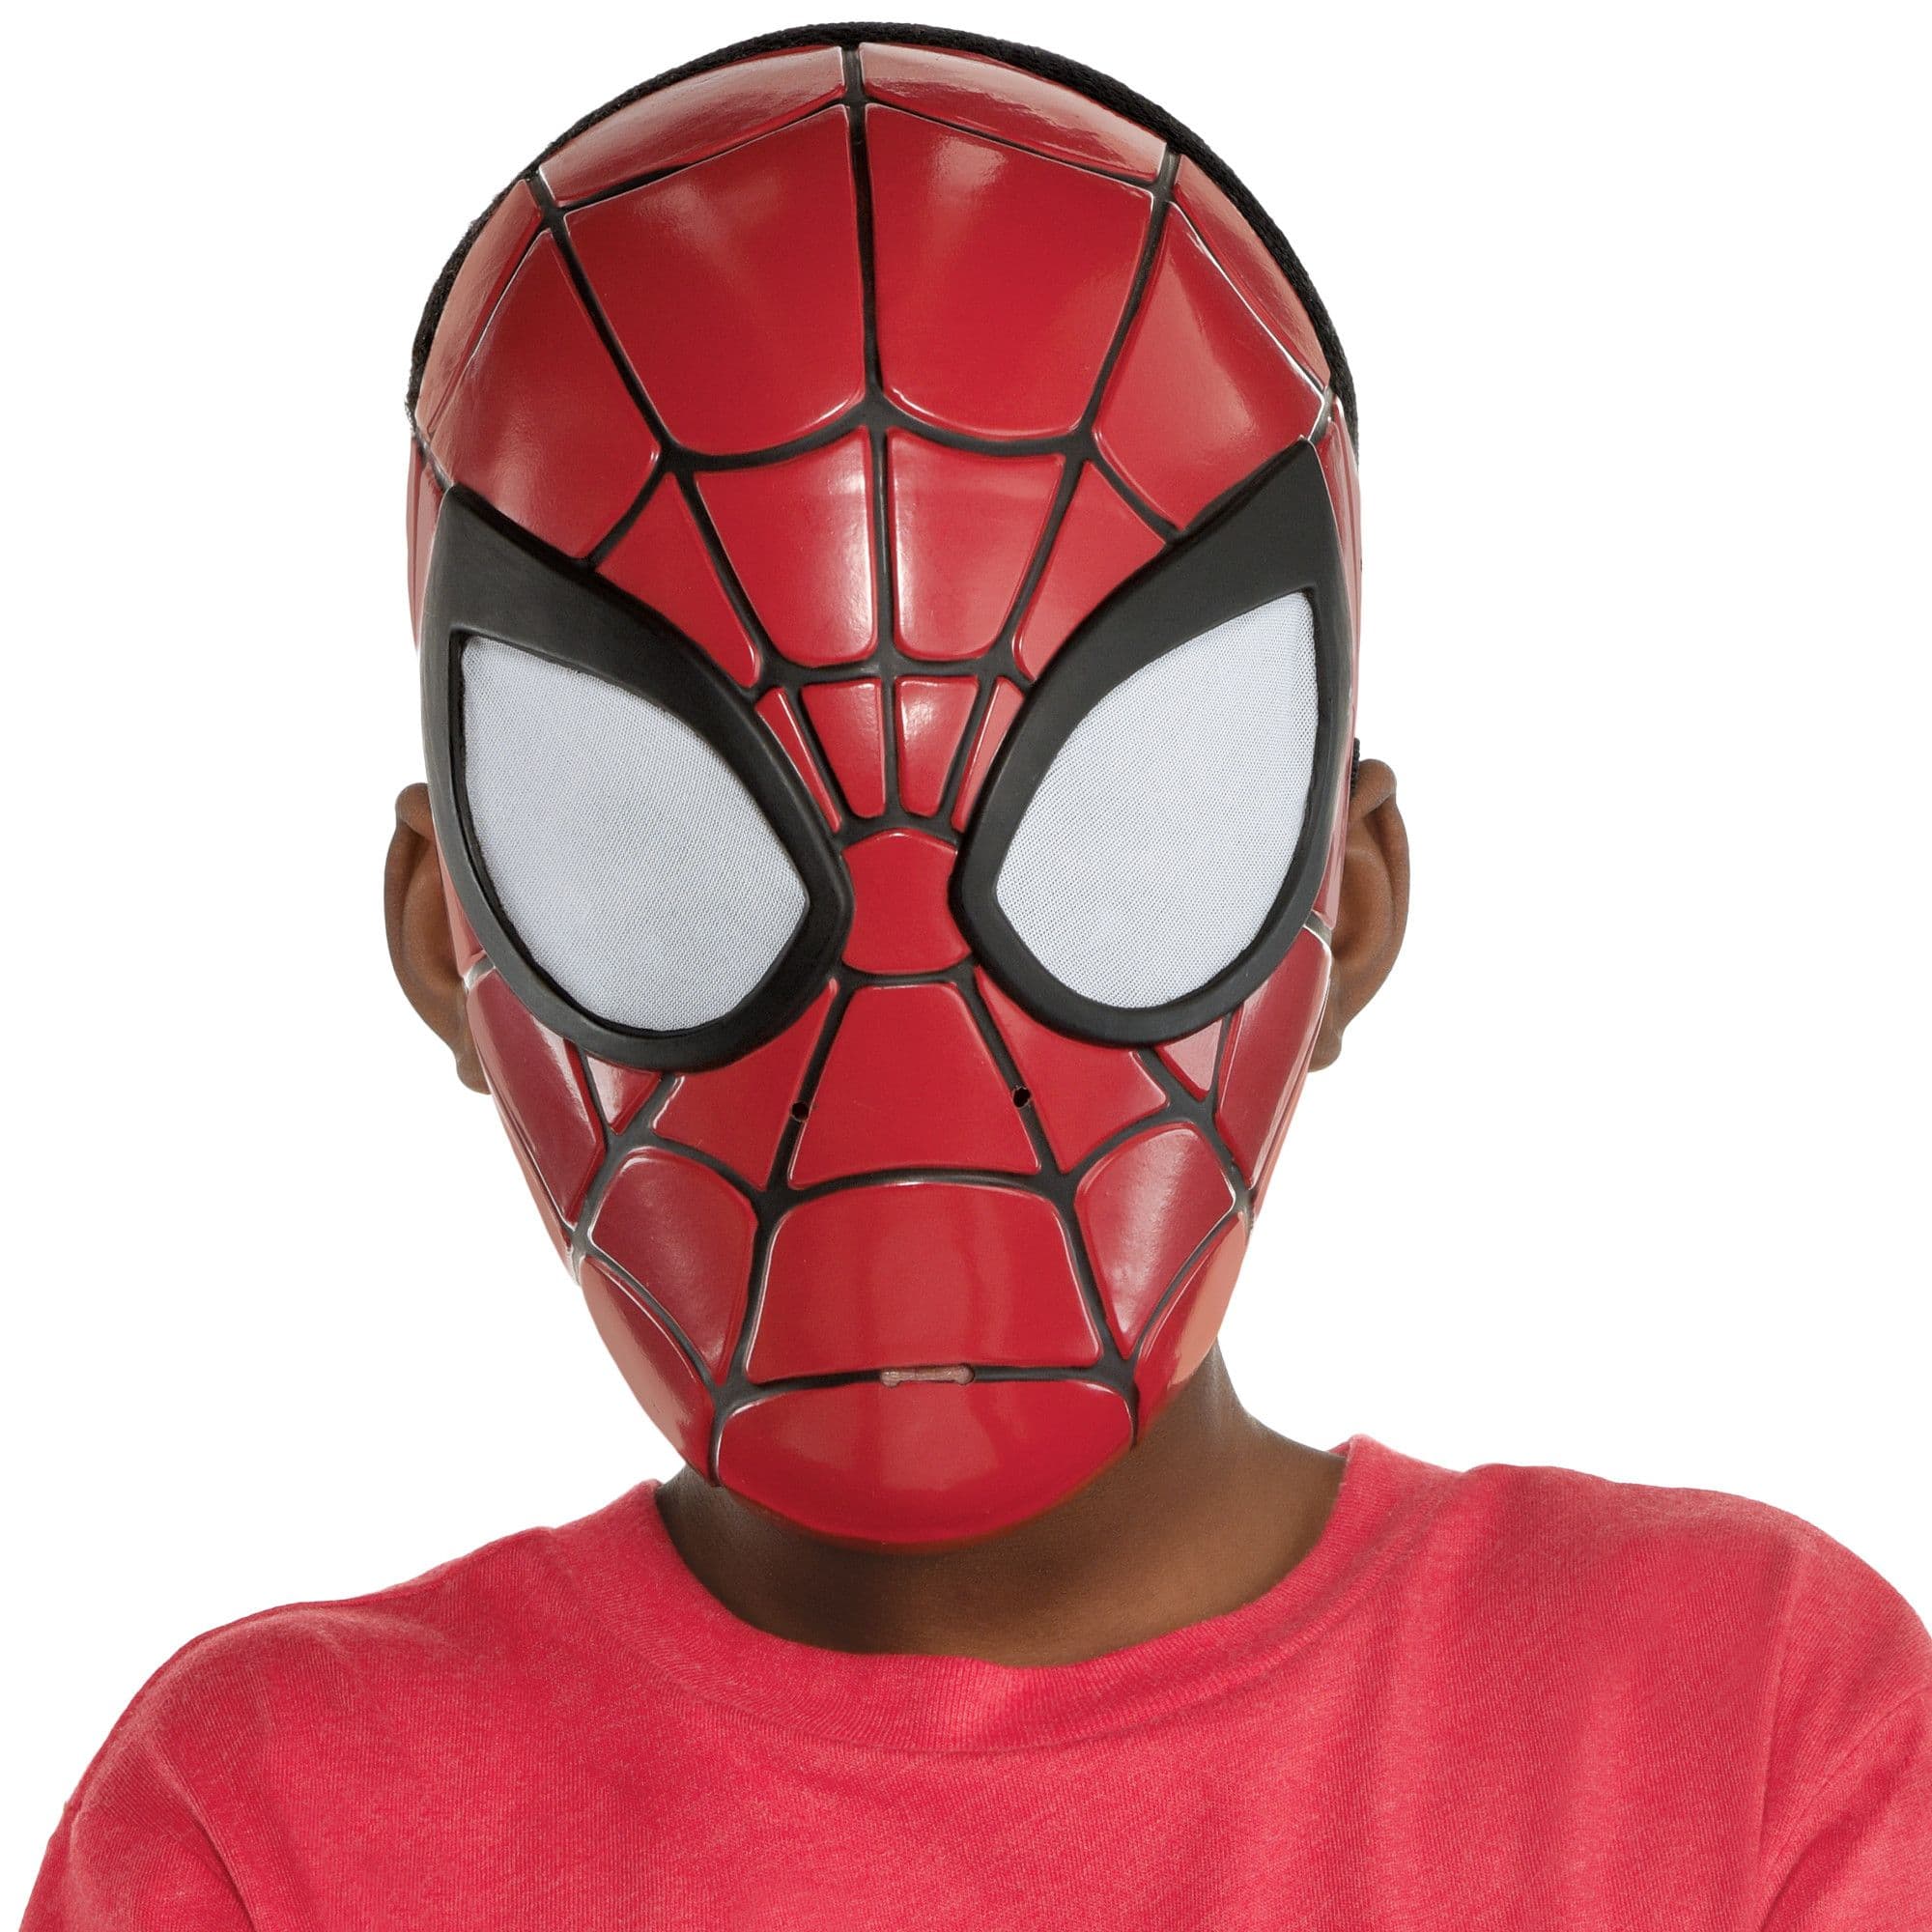 Masque en plastique Disney Marvel Spider-Man, rouge/noir, taille